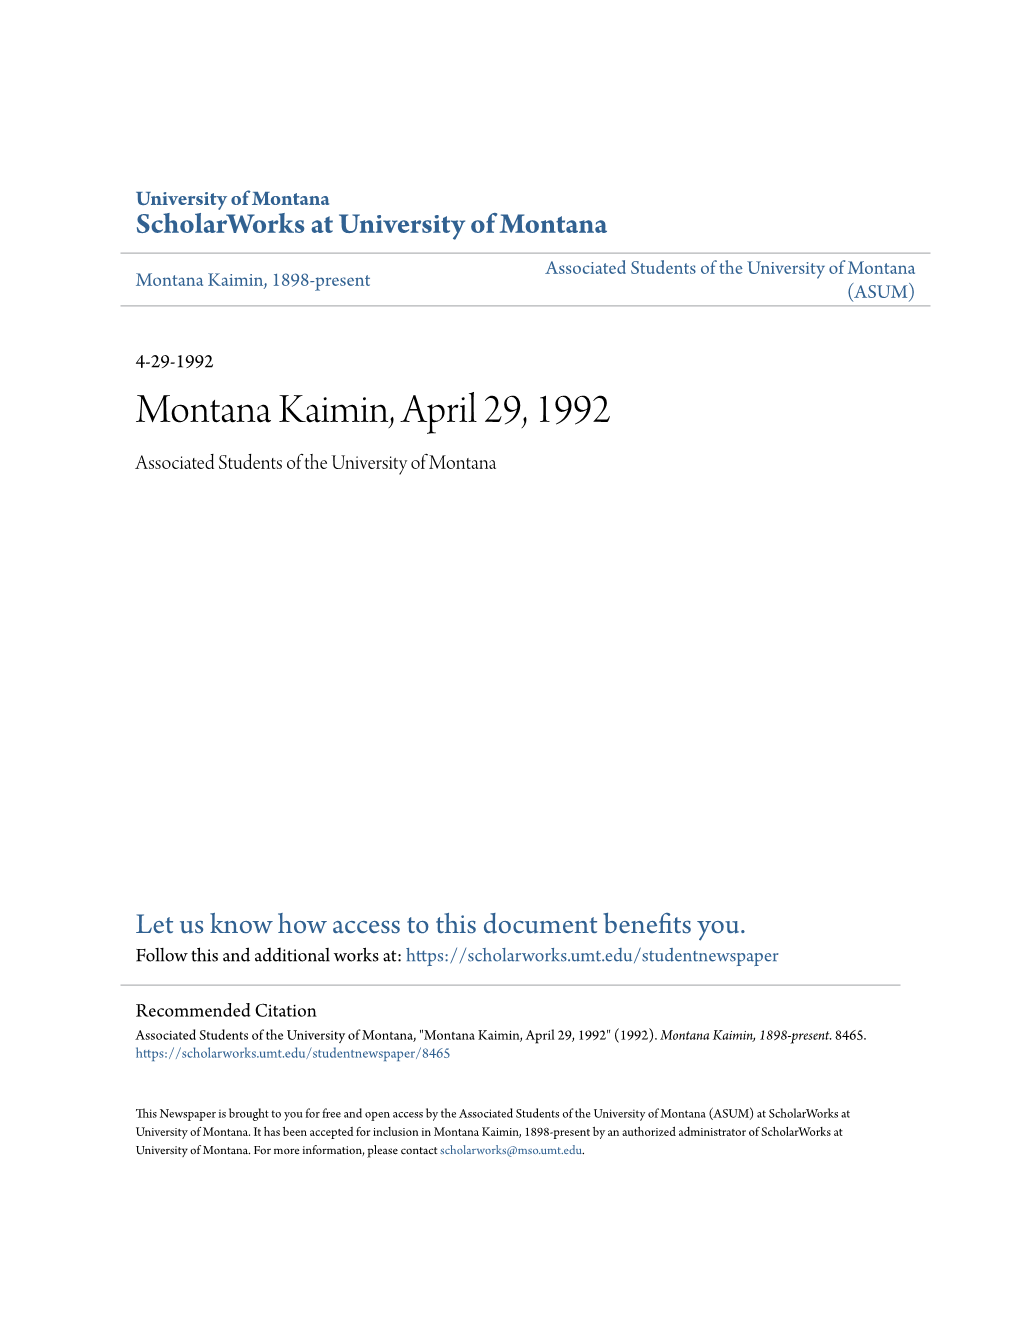 Montana Kaimin, April 29, 1992 Associated Students of the University of Montana